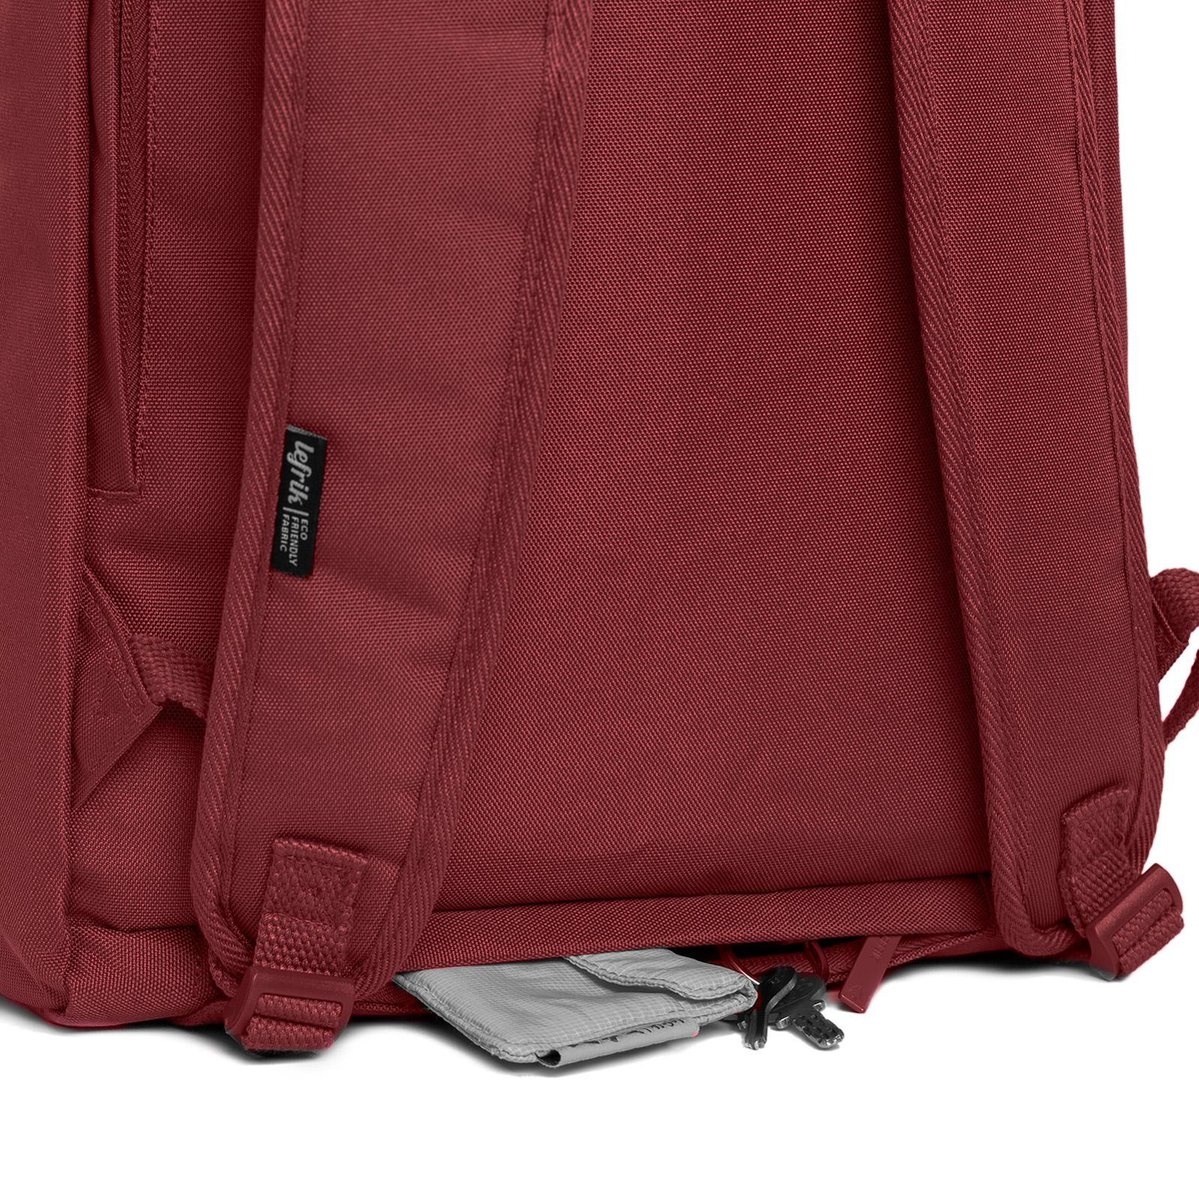 Lefrik Lefrik Roll Top backpack - Eco Friendly - Recycled Materiaal - Granate